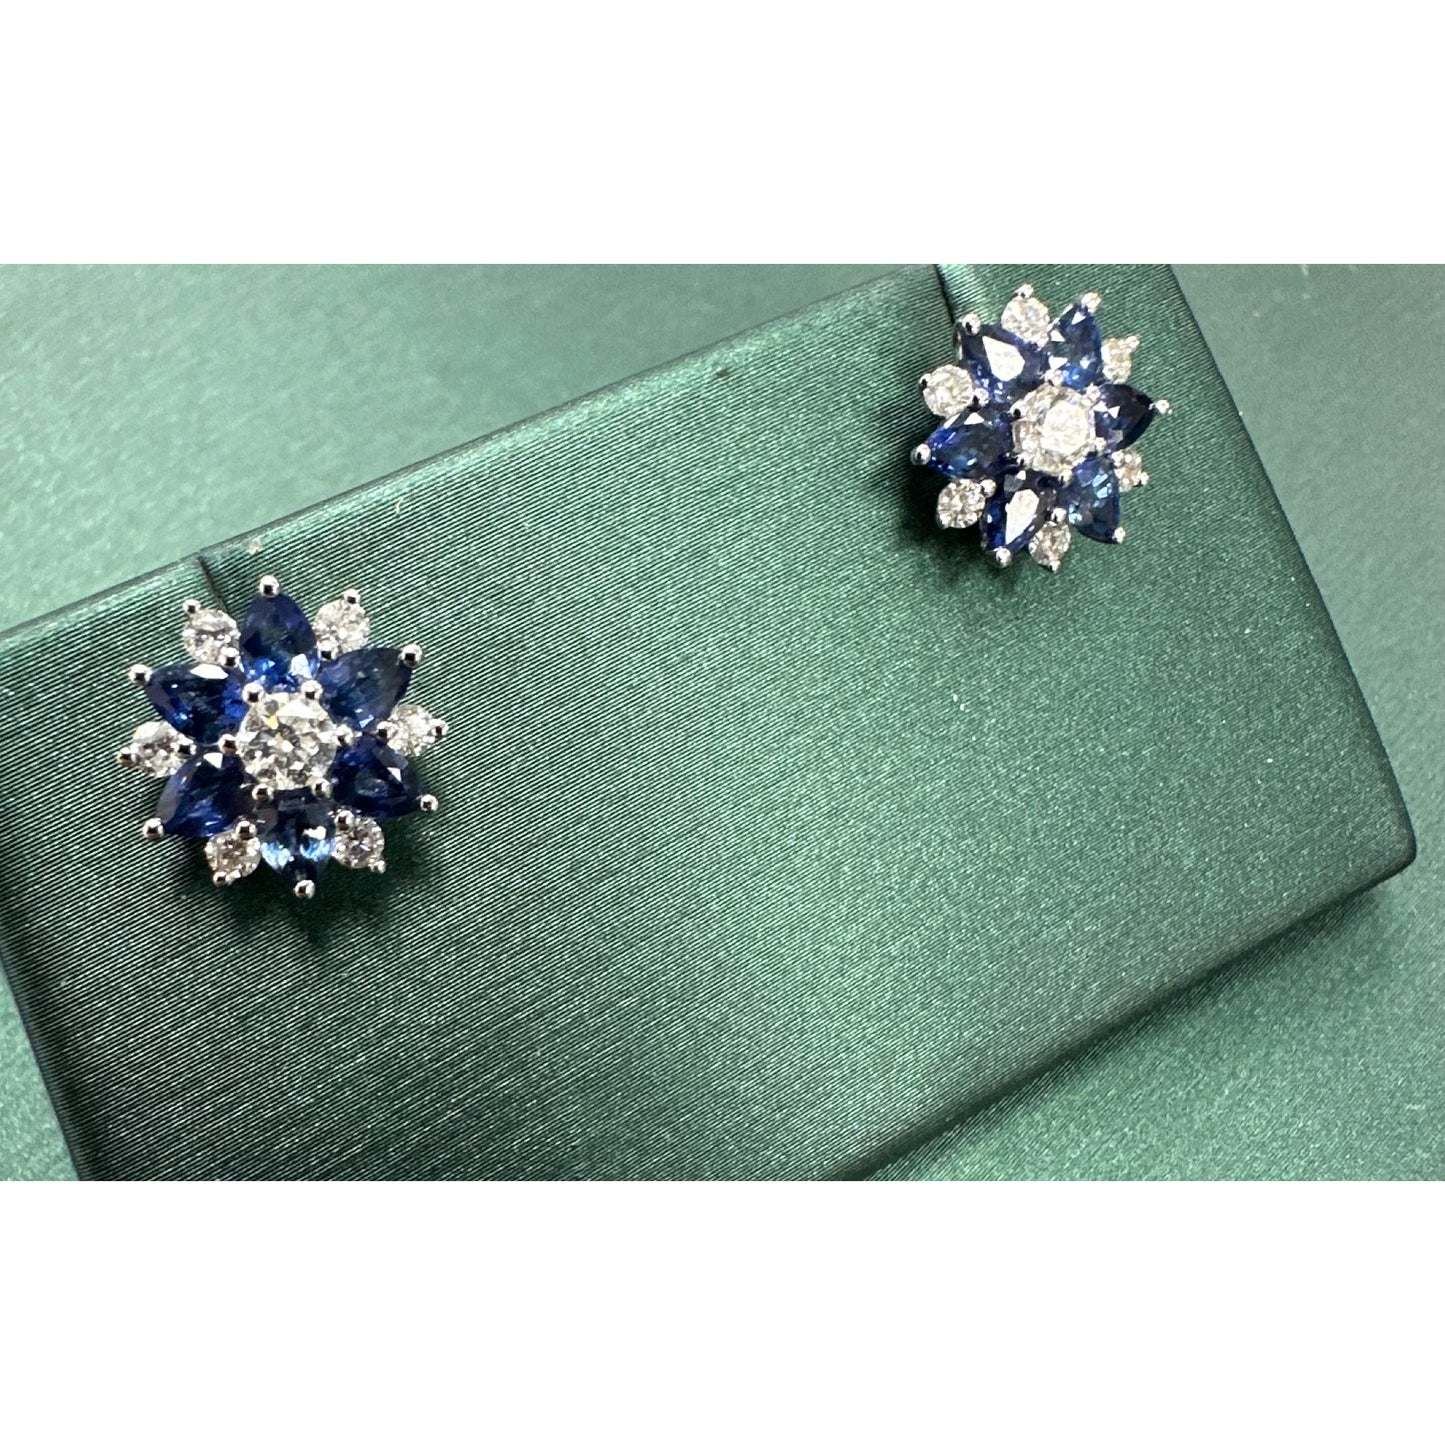 Blue Sapphire and Diamond Star Earrings